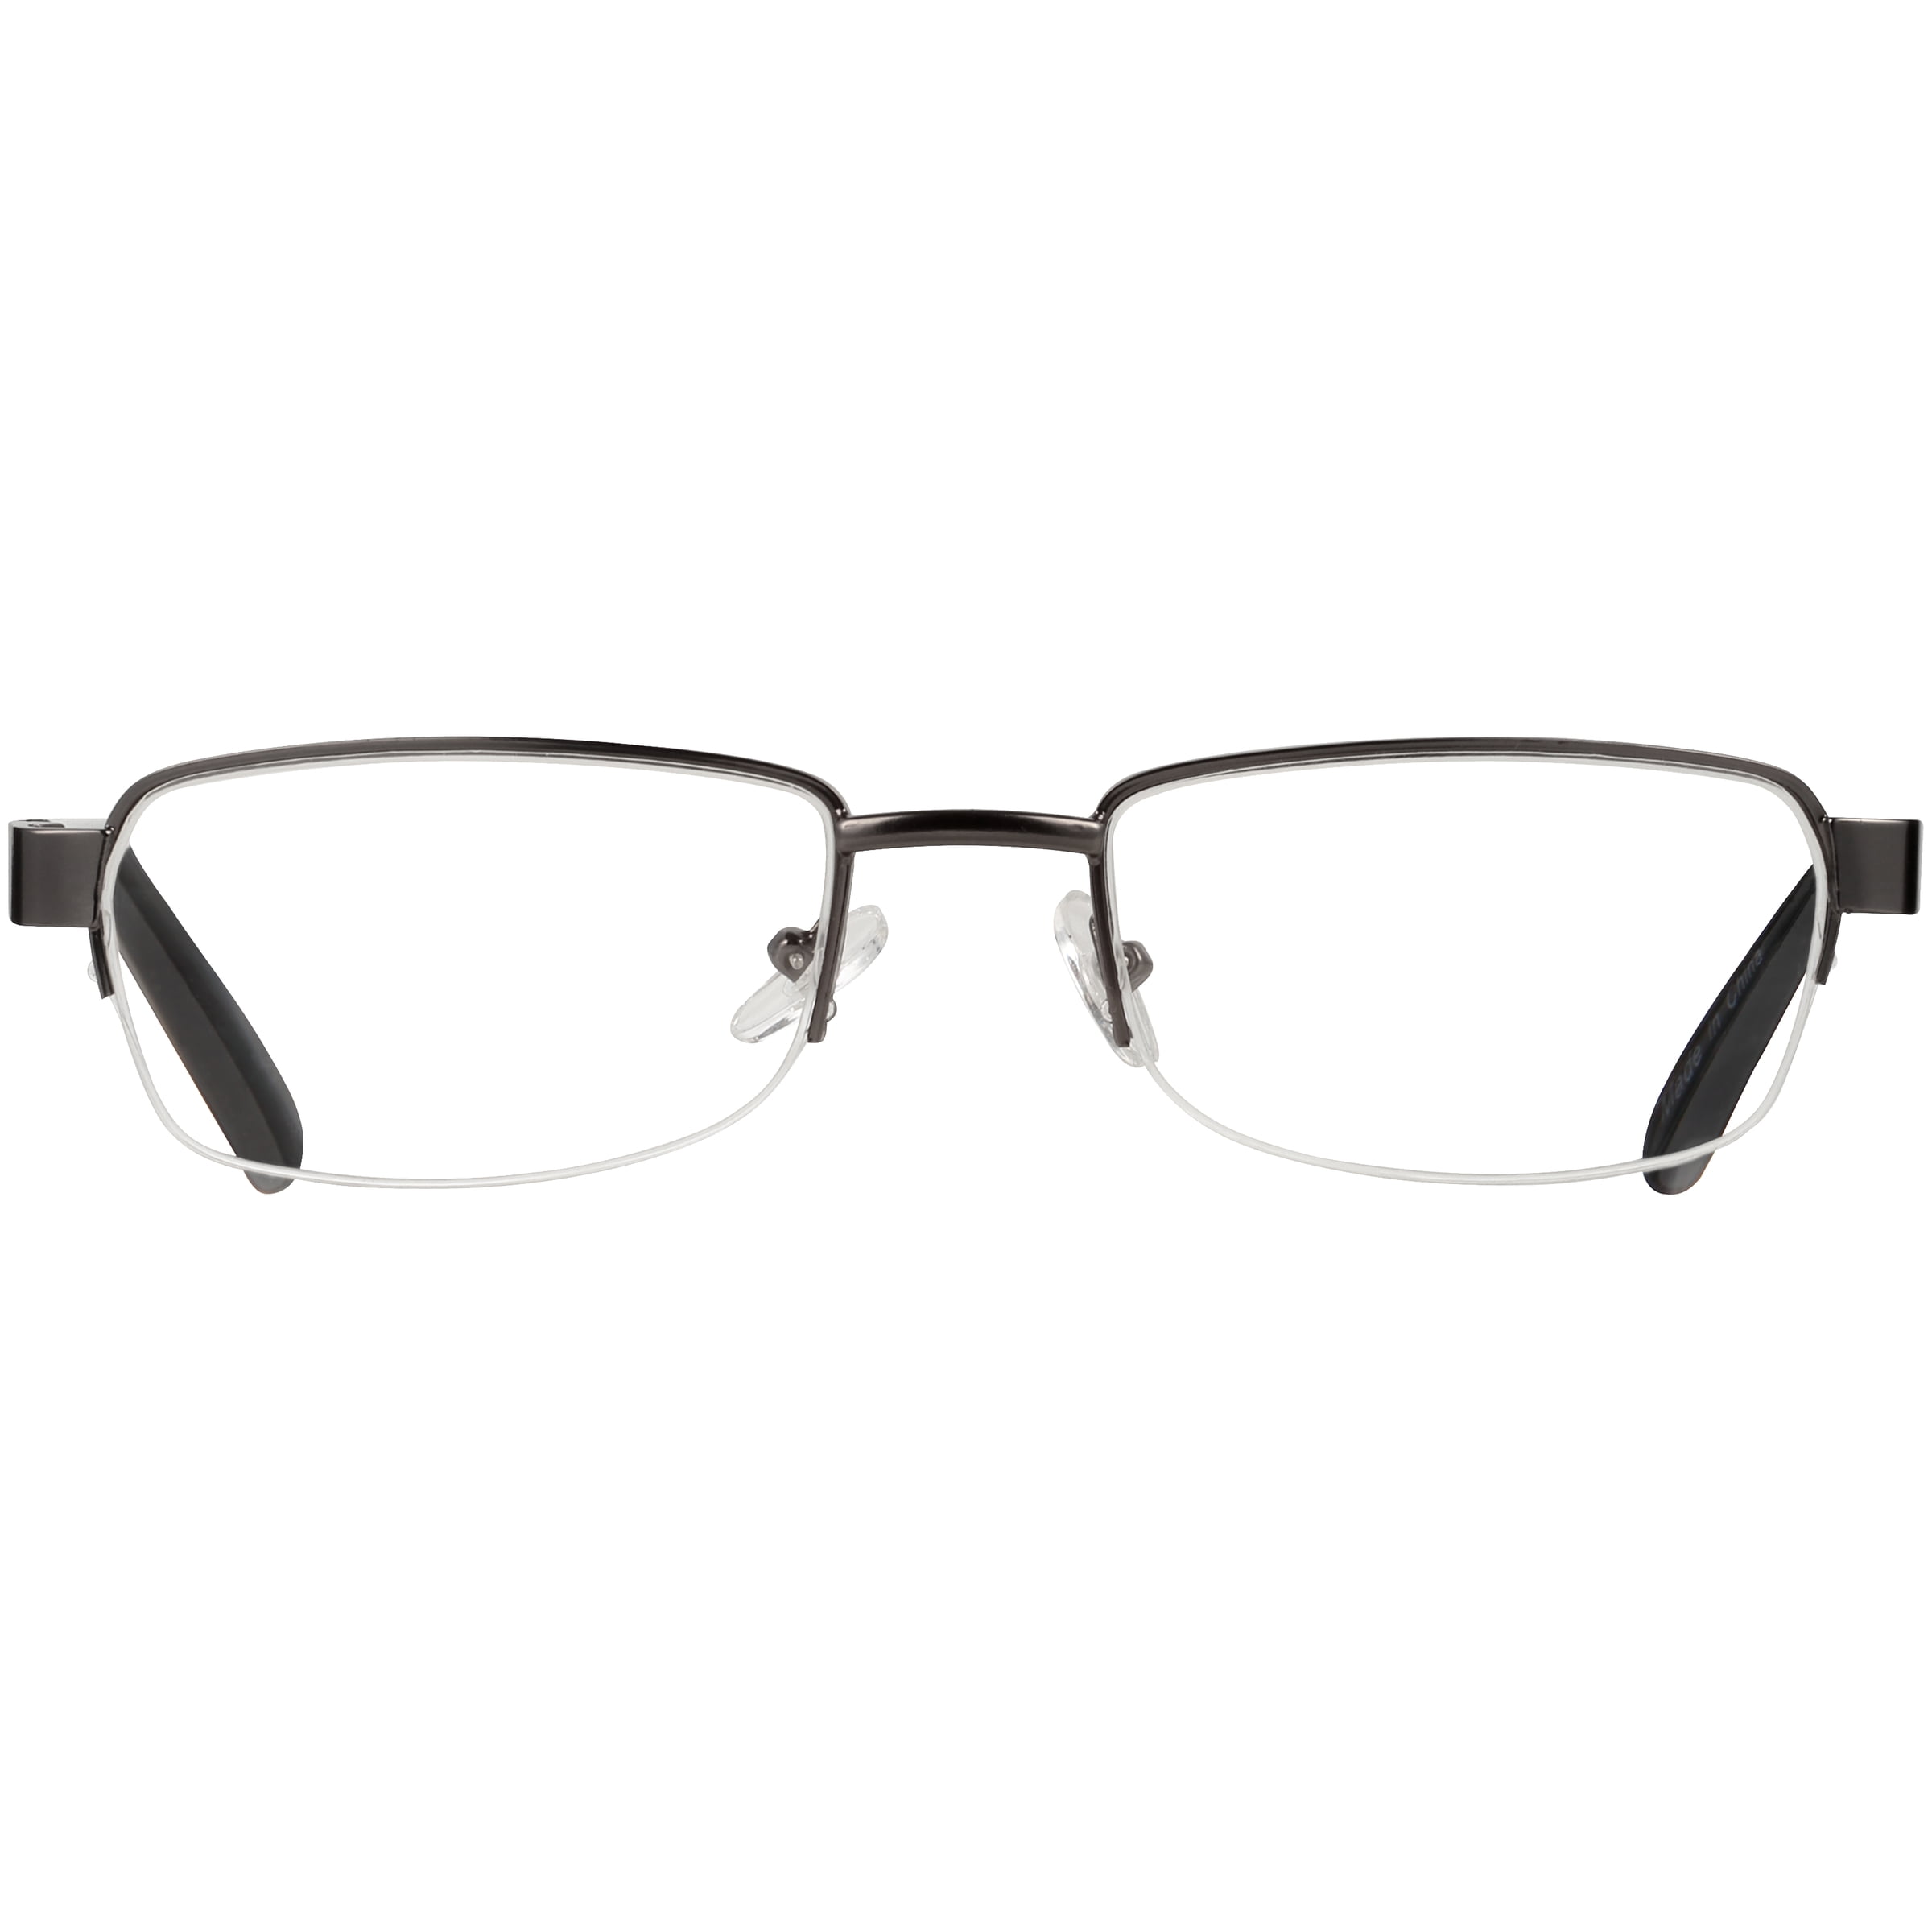 M Readers Men's Linden +2.50 Rectangle Reading Glasses with Case, Dark ...